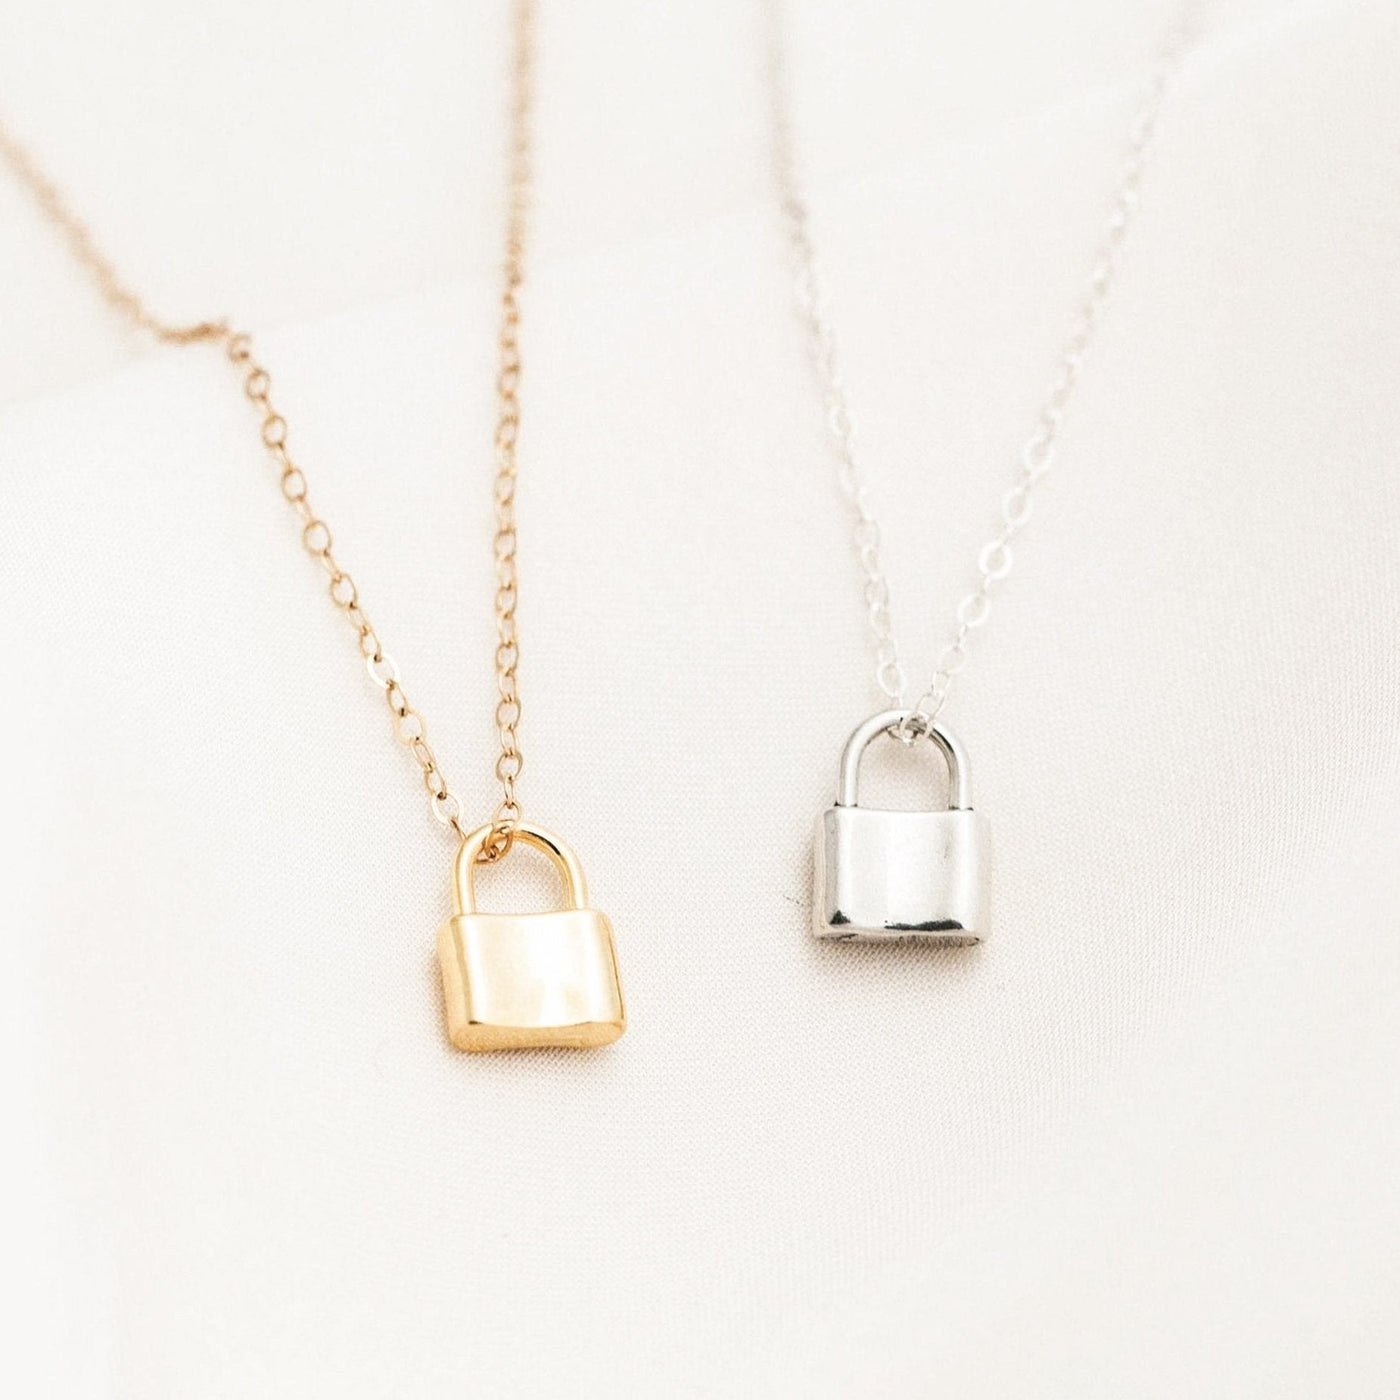 Tiny Lock Necklace by Simple & Dainty Jewelry